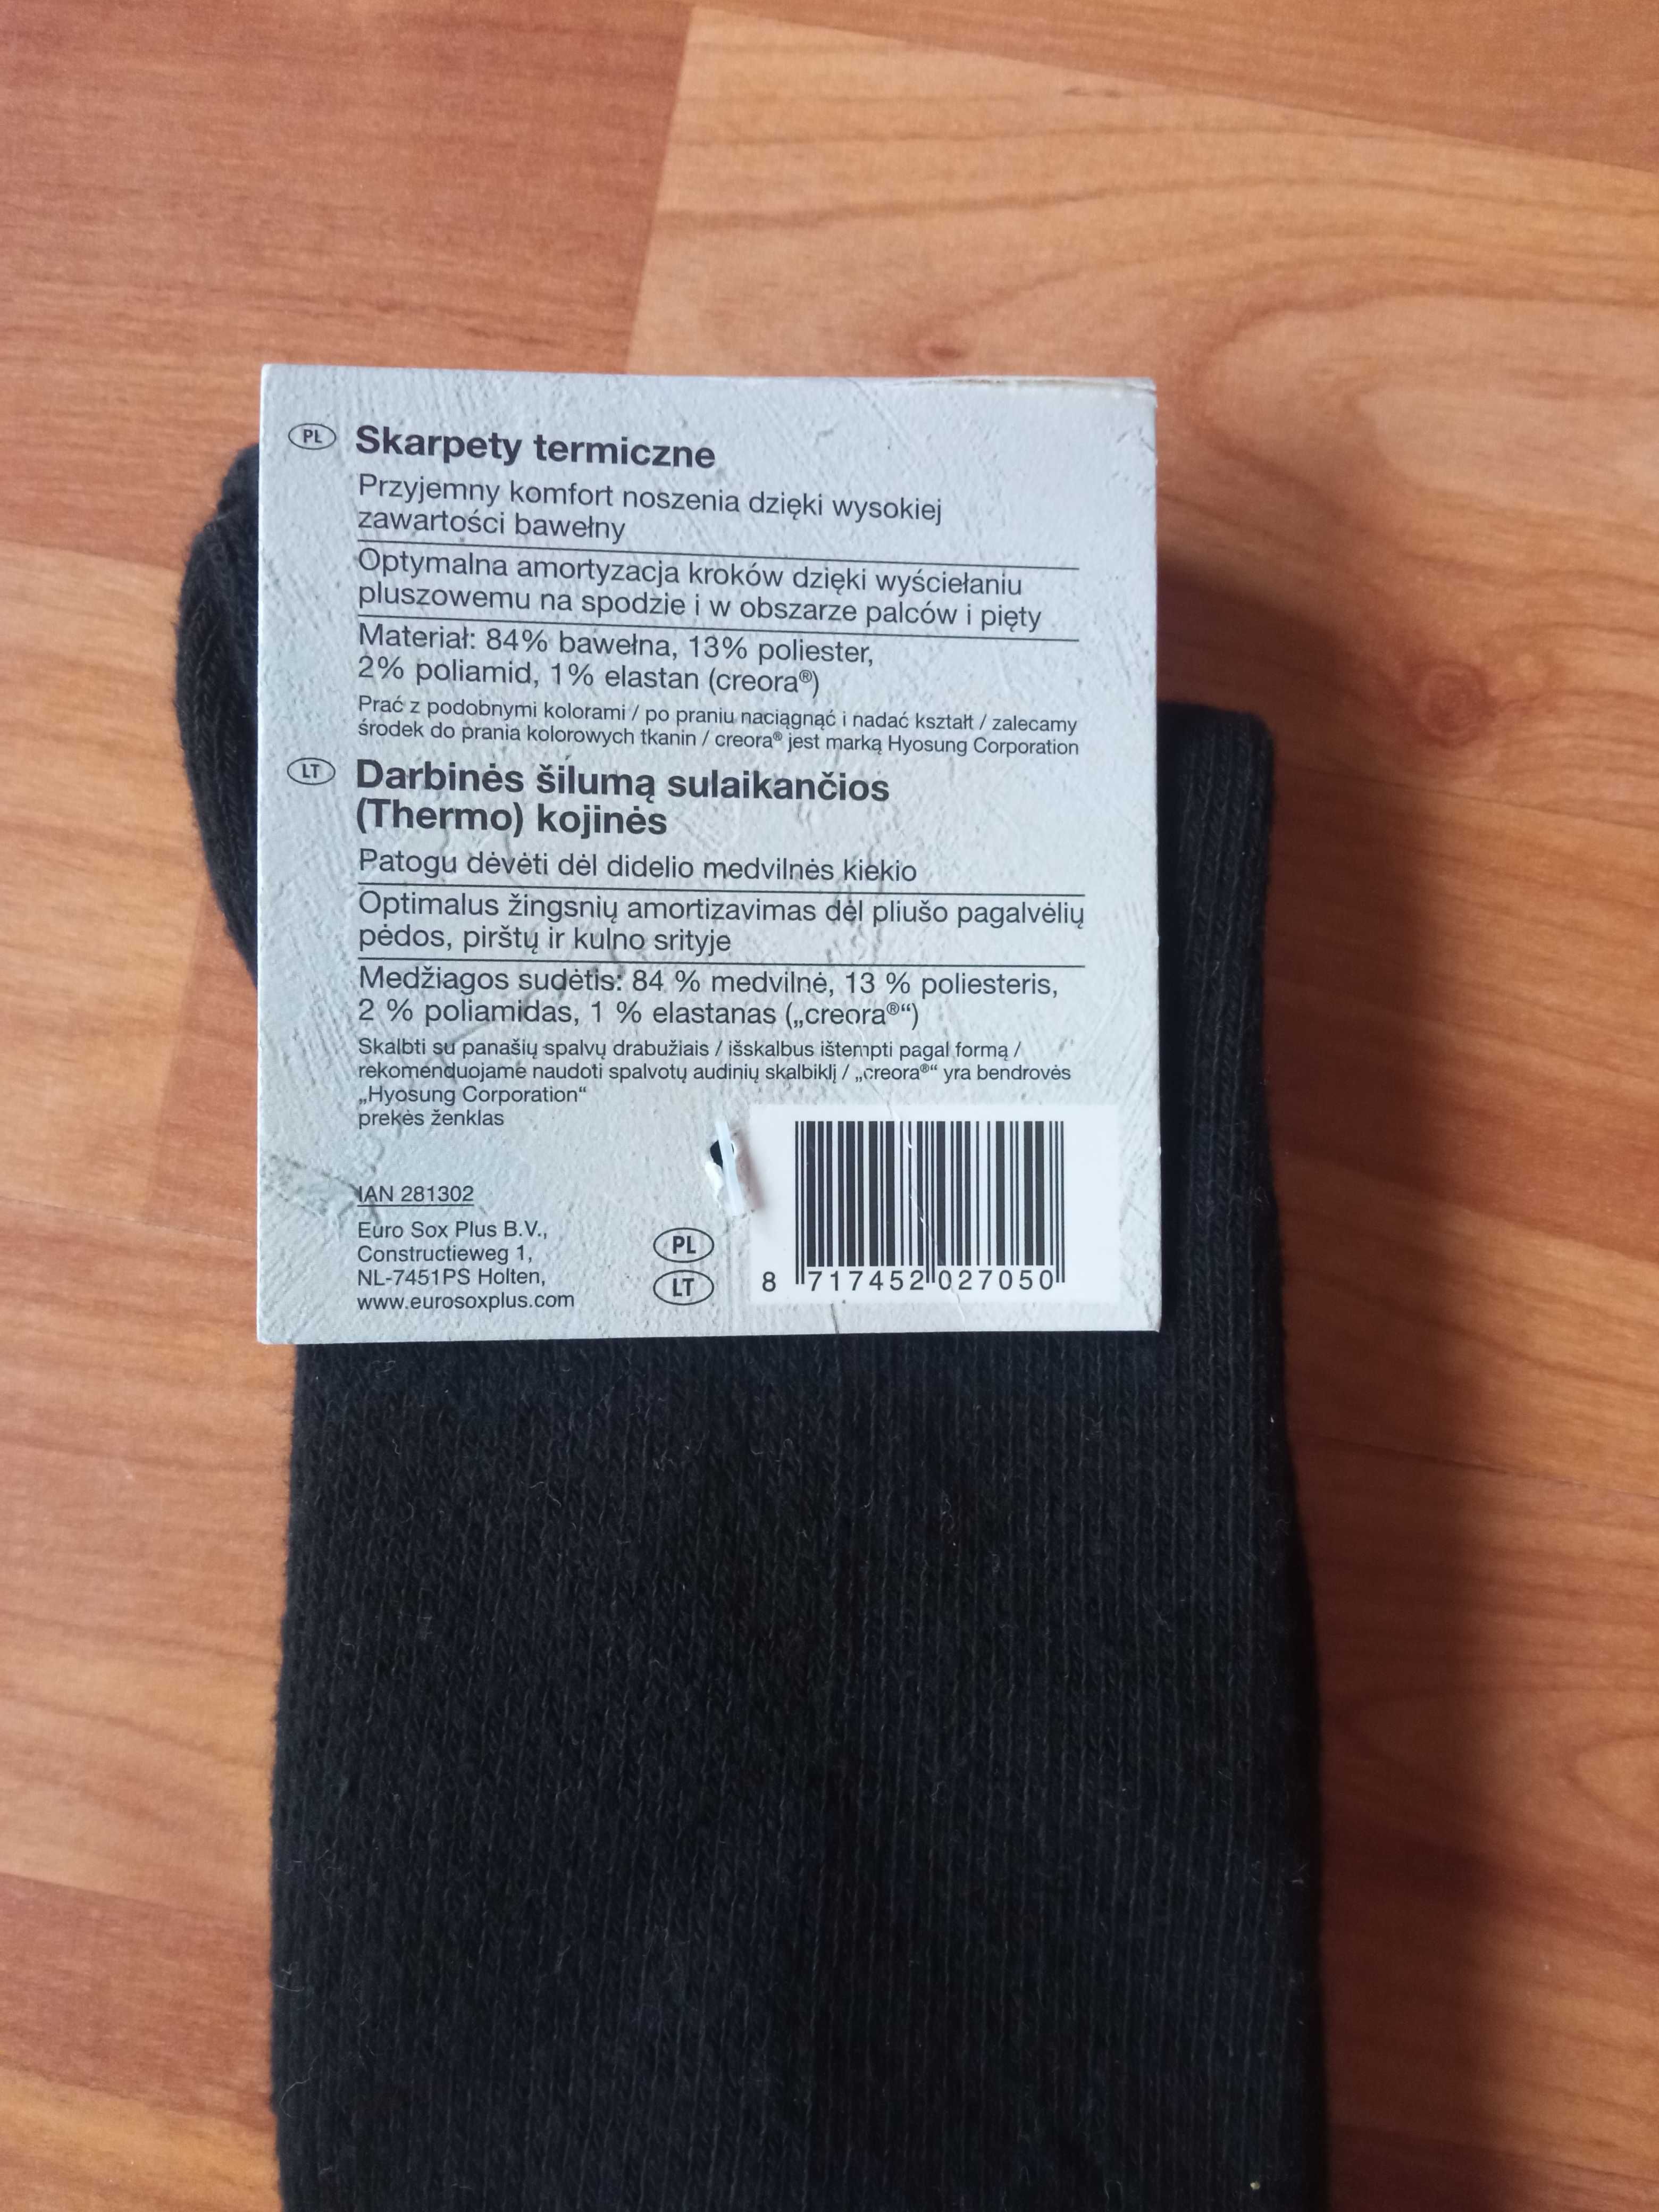 Ciepłe grube skarpety męskie Thermal Socks rozmiar 39-42 Nowe